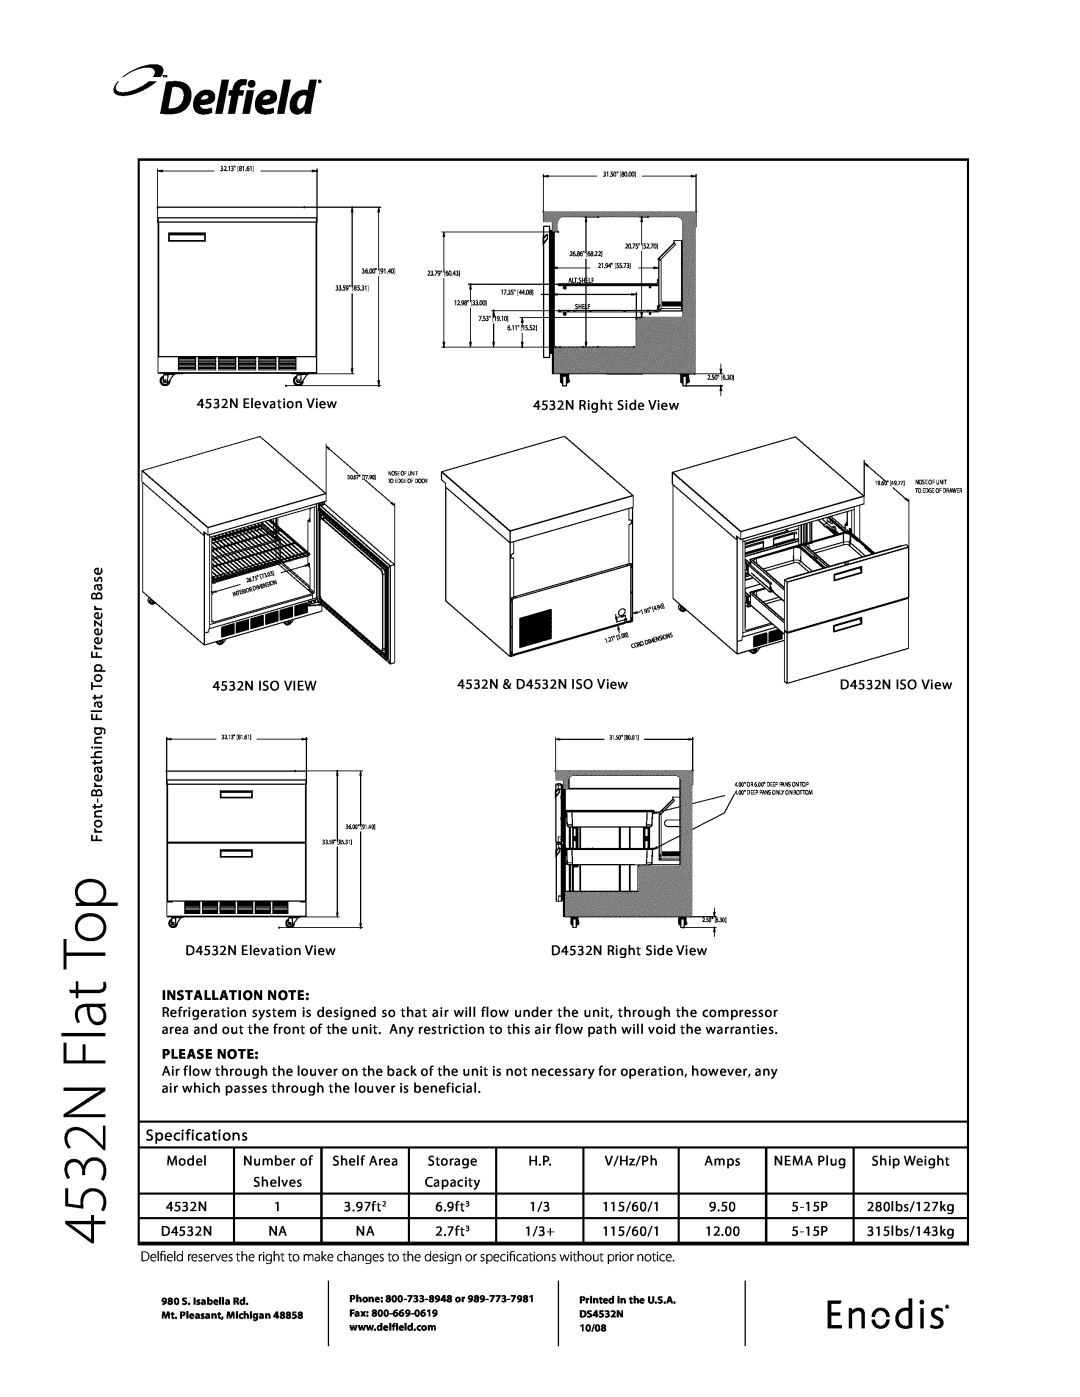 Delfield DS4532N specifications Flat Top Freezer Base, Specifications, 4532N Flat, Delfield, Installation Note, Please Note 